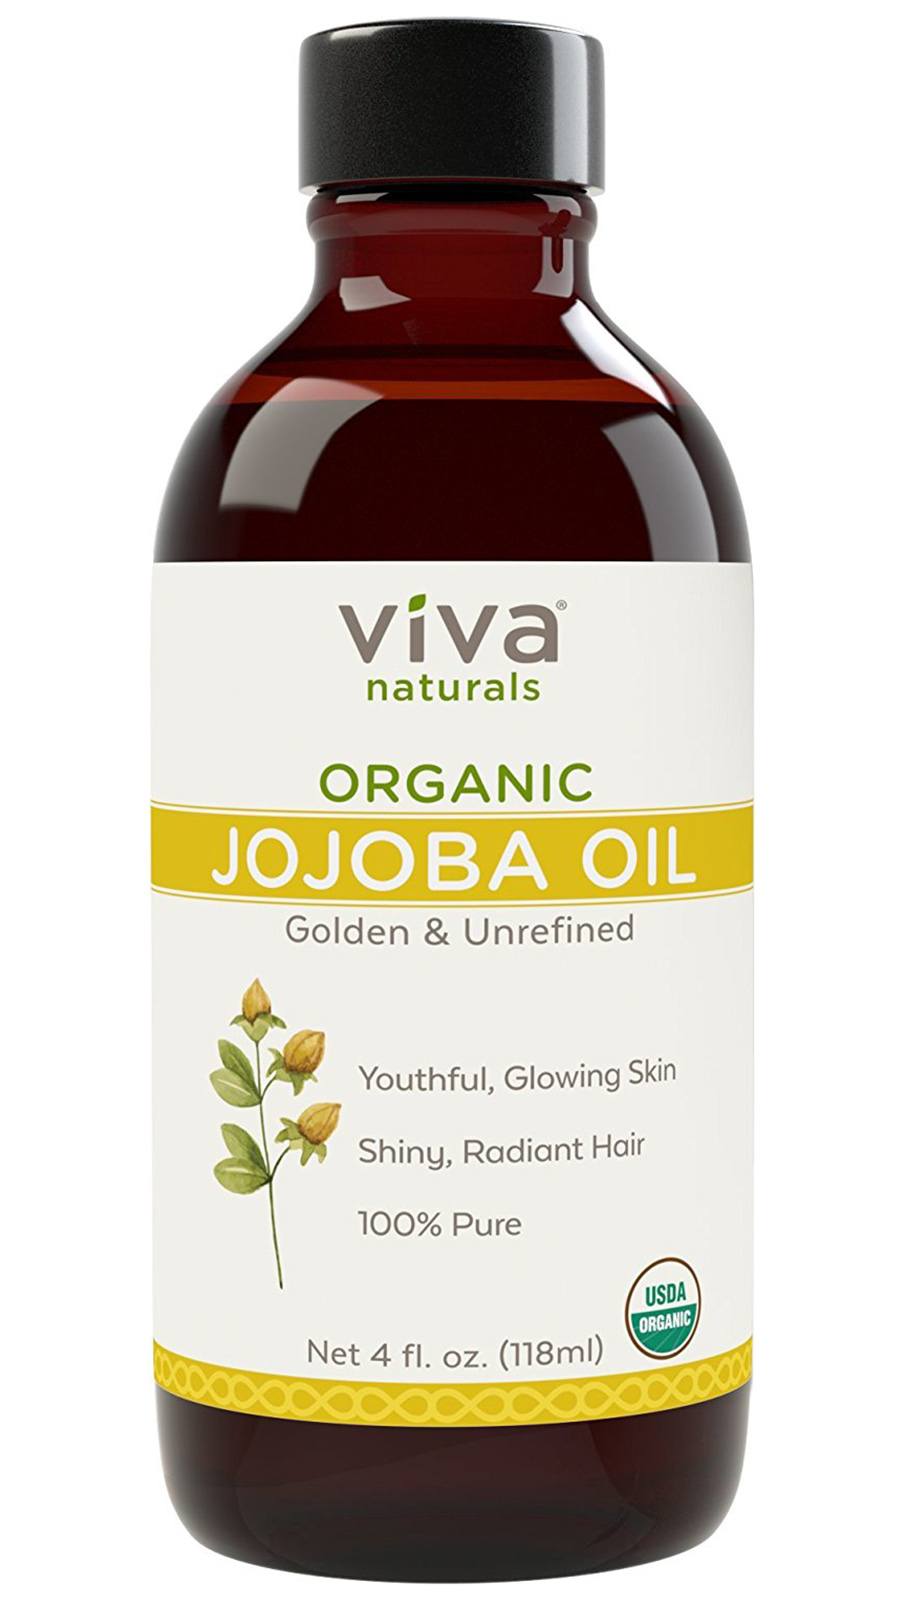 Jojoba Oil For Your Hair Jojoba Oil Benefits And Reviews